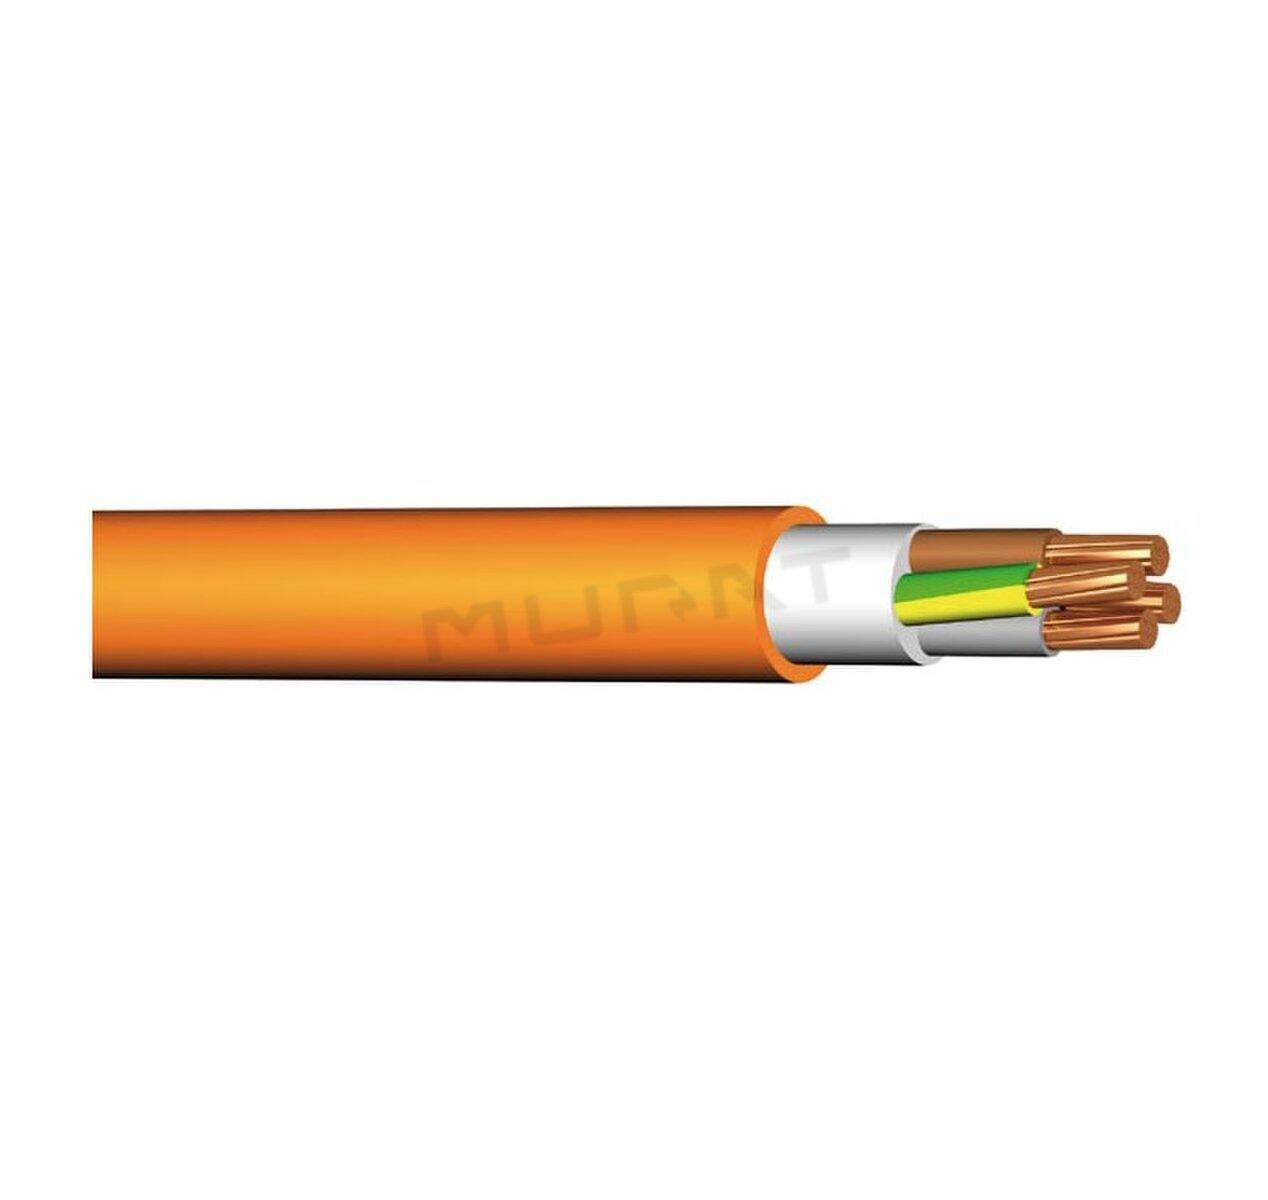 Kábel PRAFlaSafe X-J 5x35 mm2 RM B2ca s1d1a1